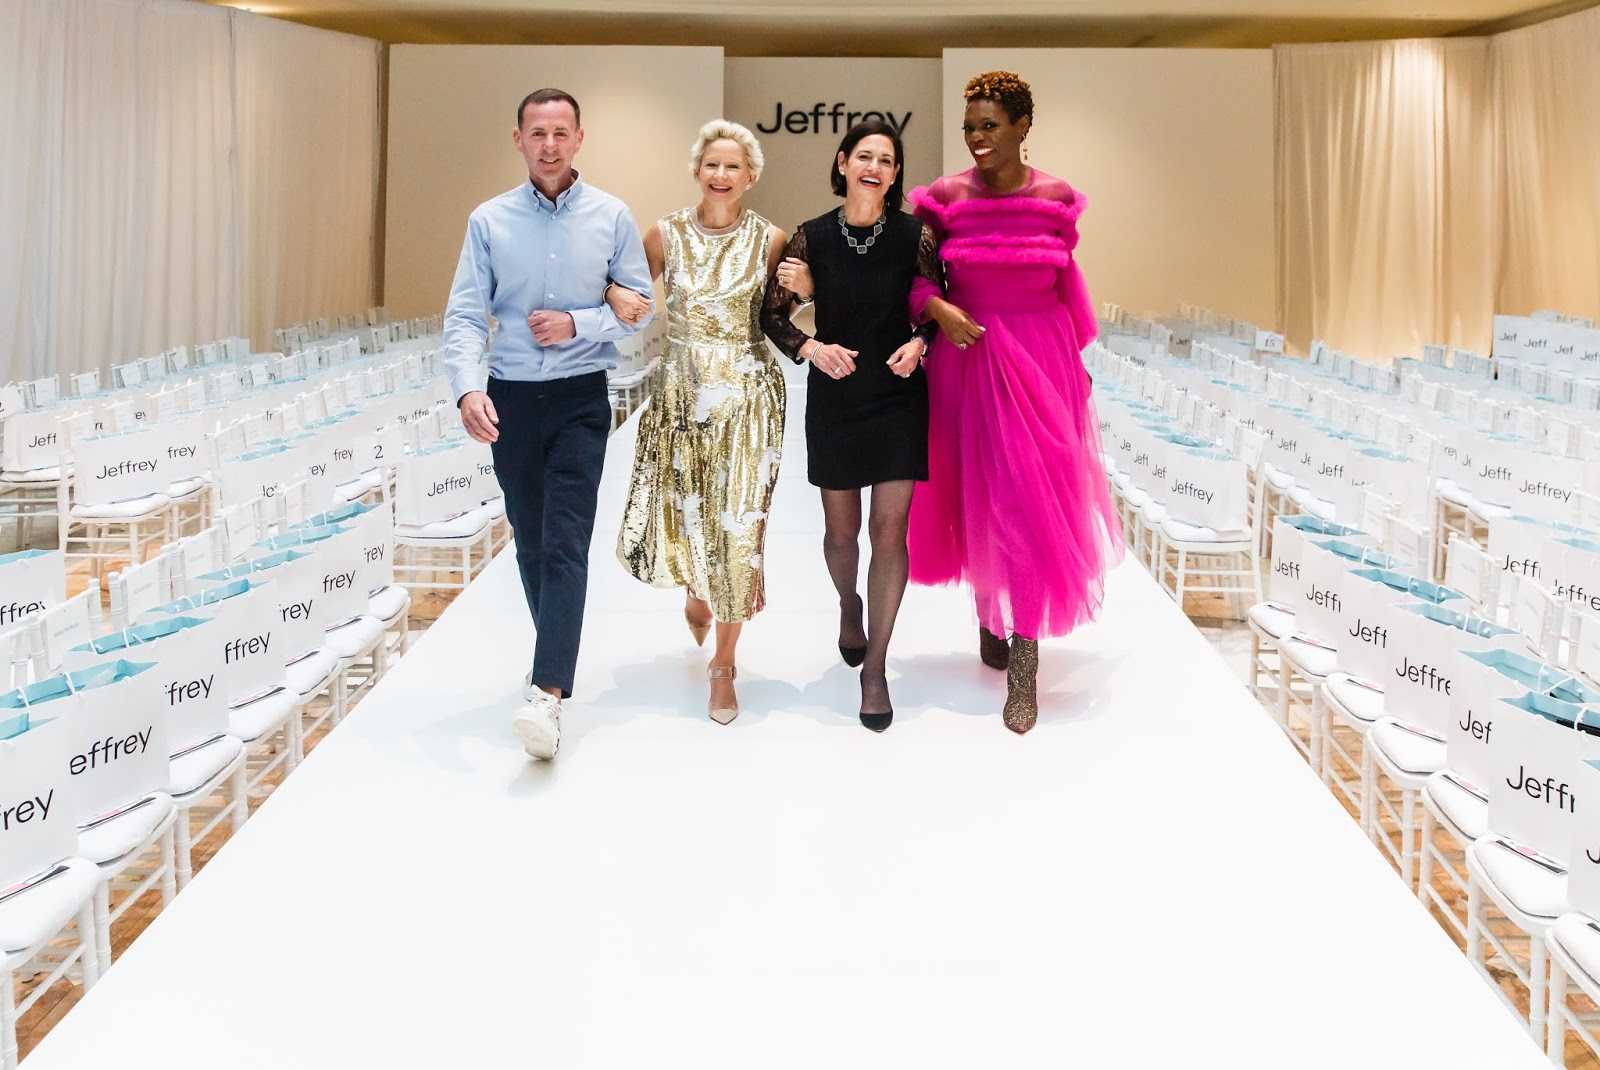 Daring Looks Celebrities Wore During Paris Haute Couture Fashion Week